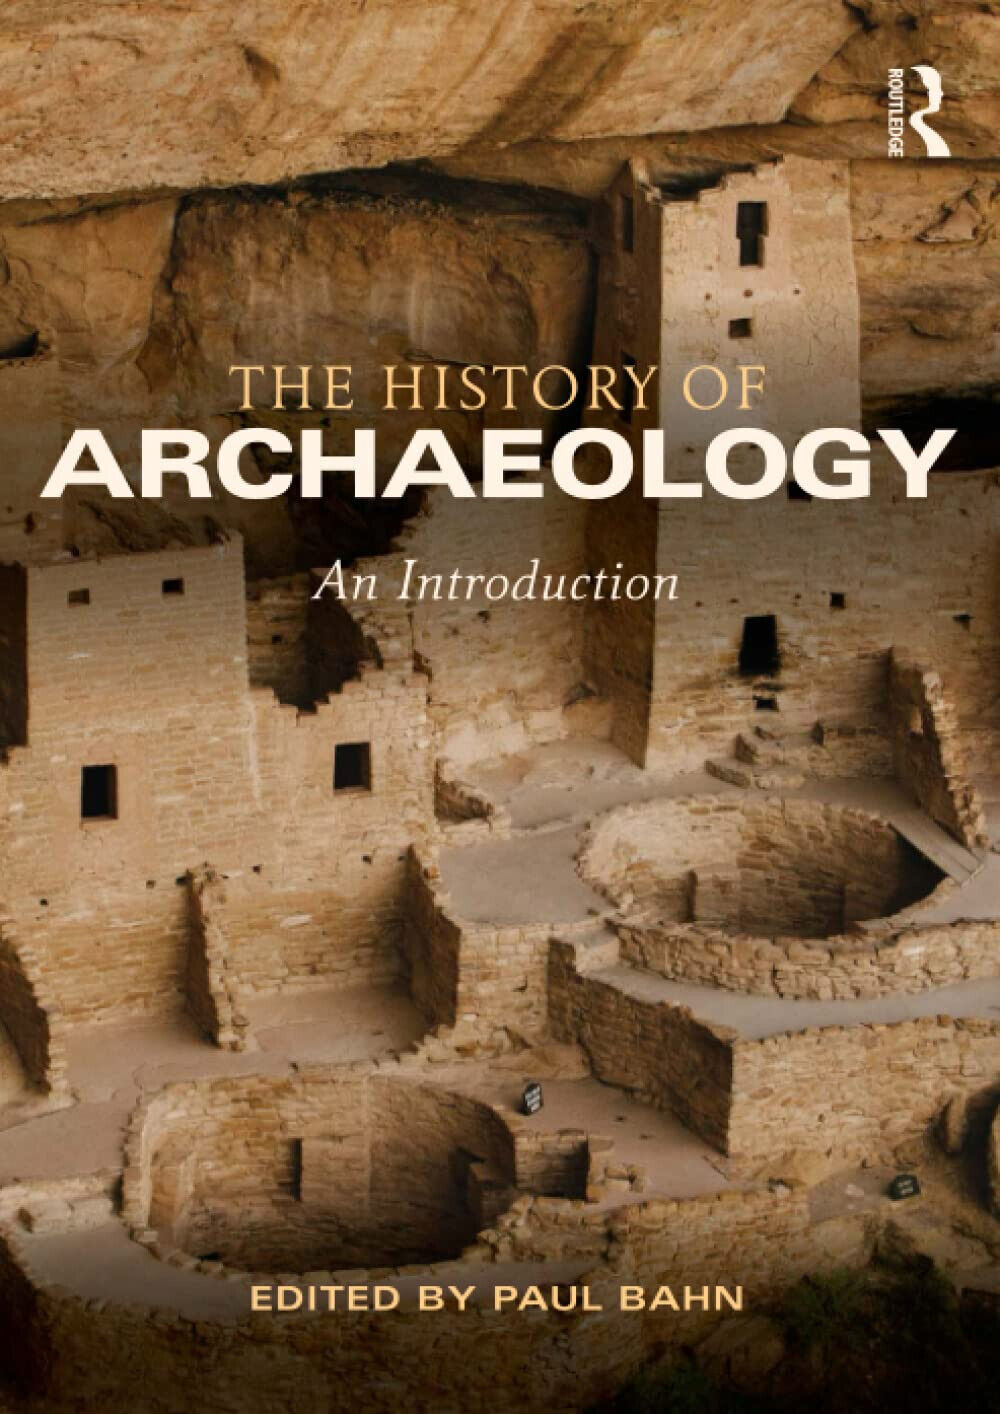 The History of Archaeology - Paul Bahn - Taylor & Francis, 2013